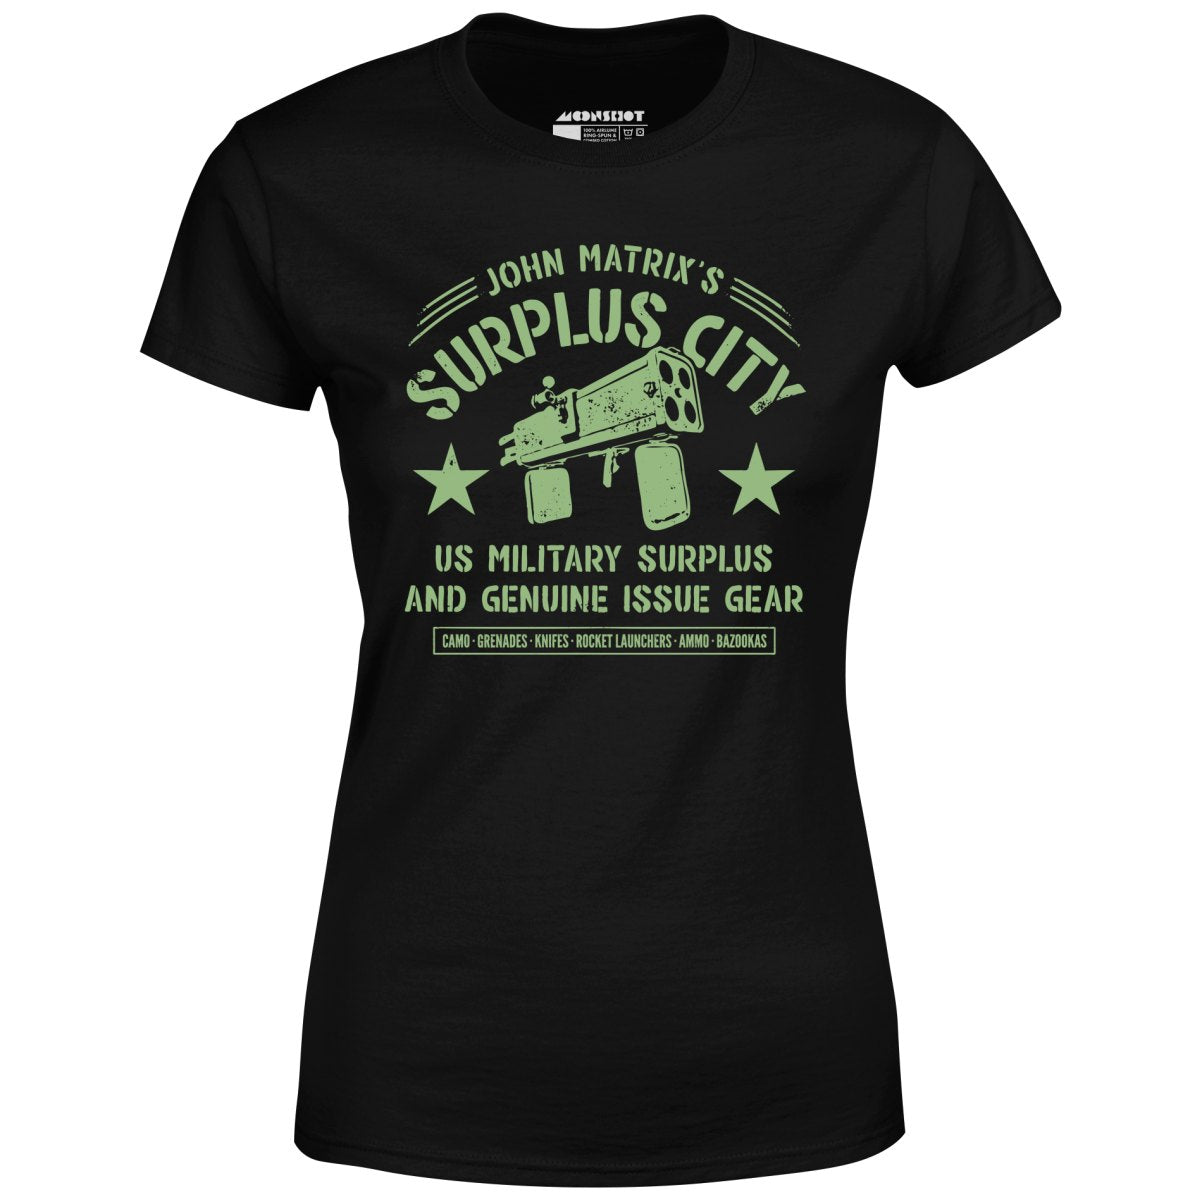 John Matrix's Surplus City - Women's T-Shirt